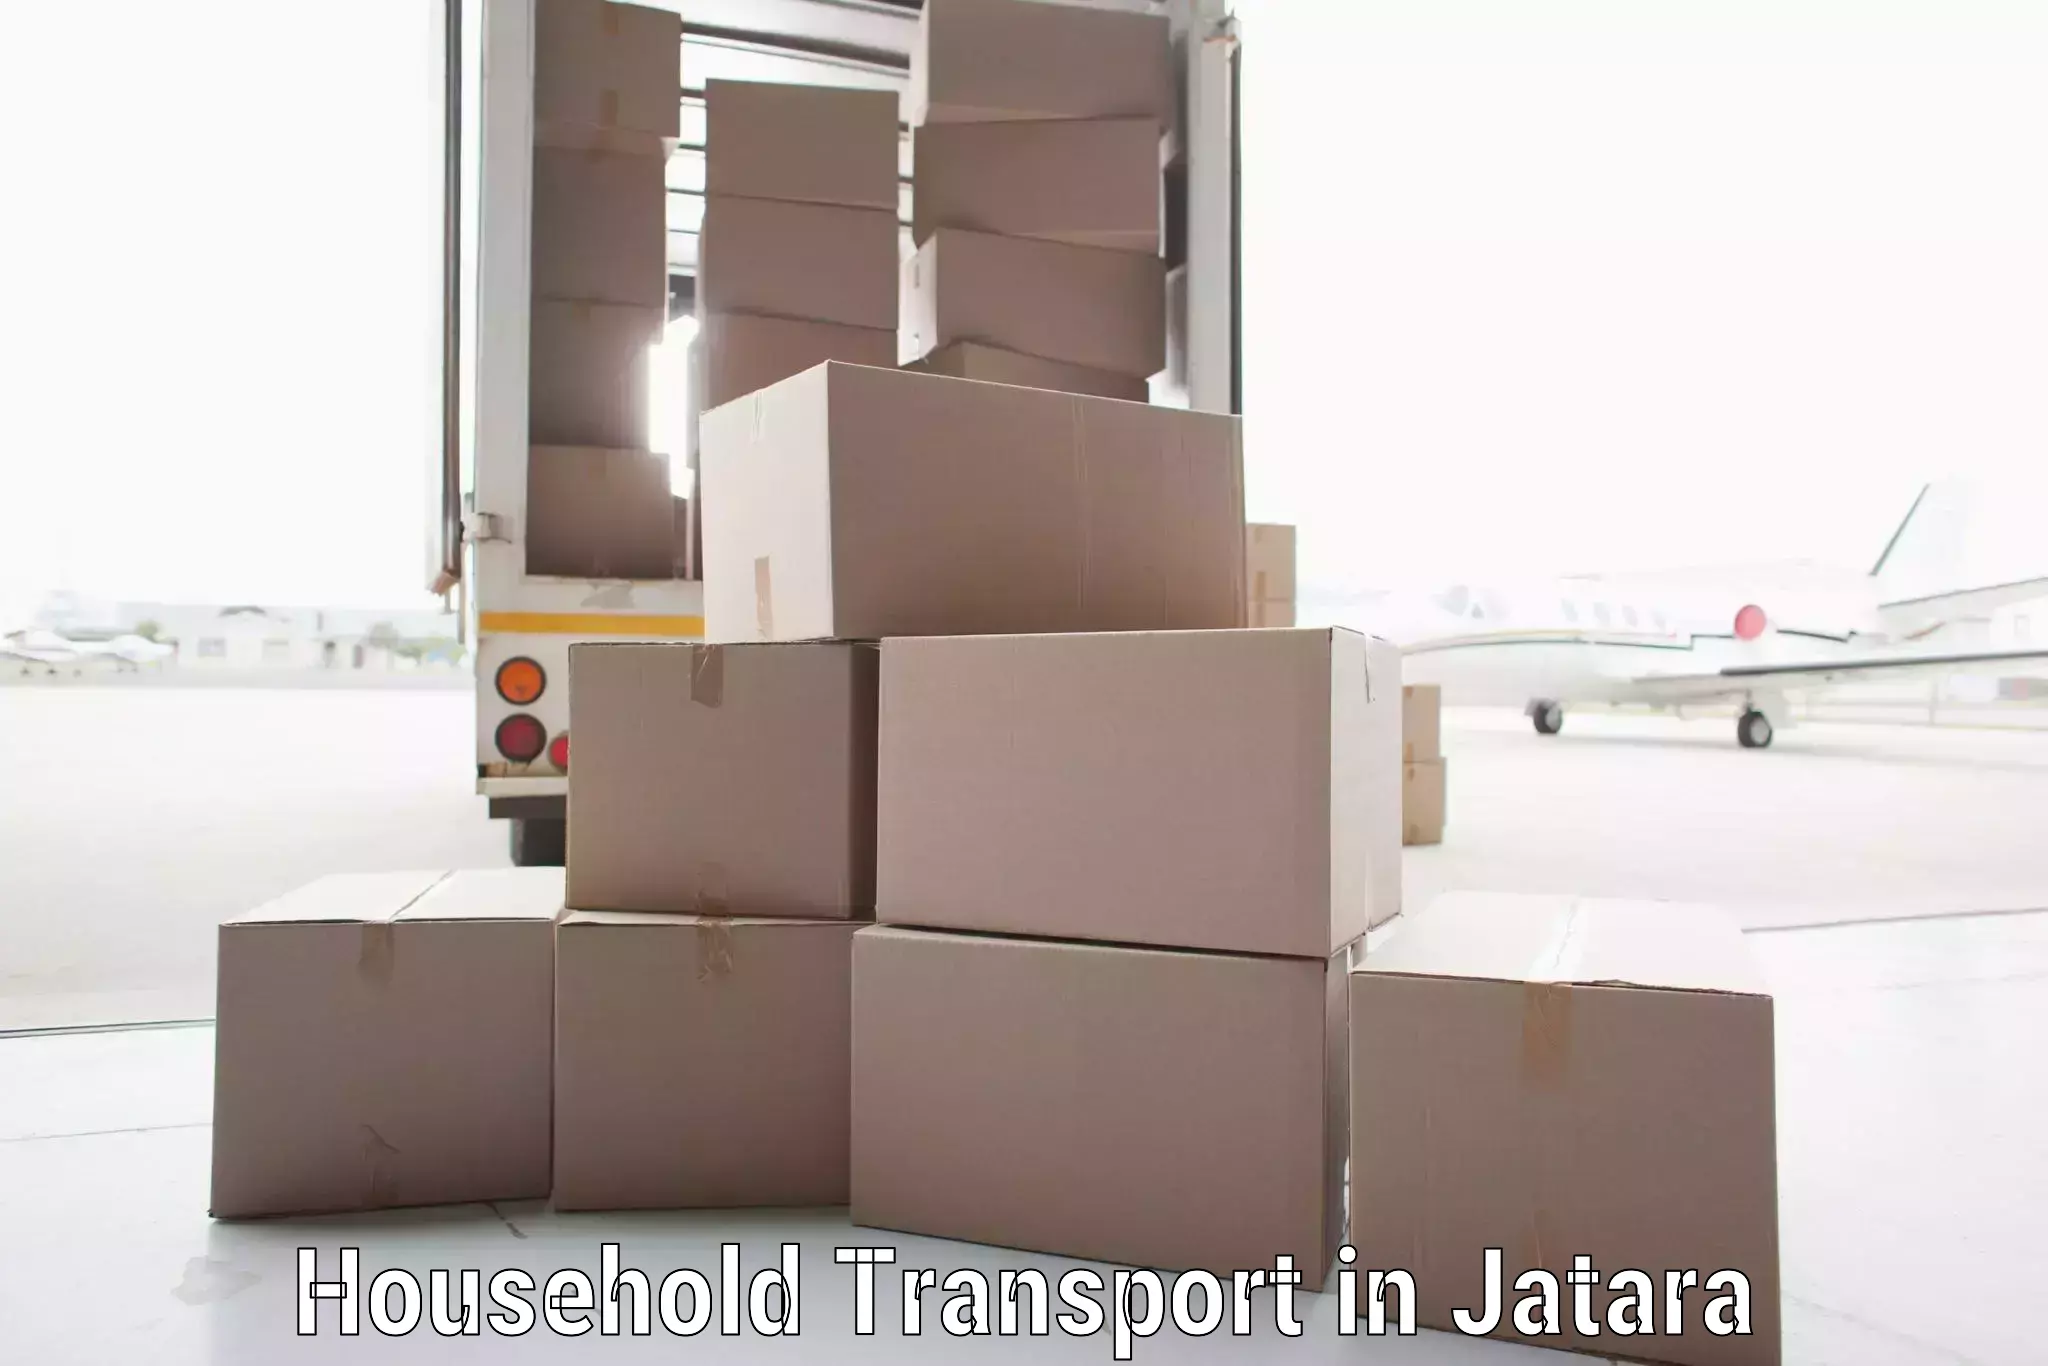 Household goods transport service in Jatara